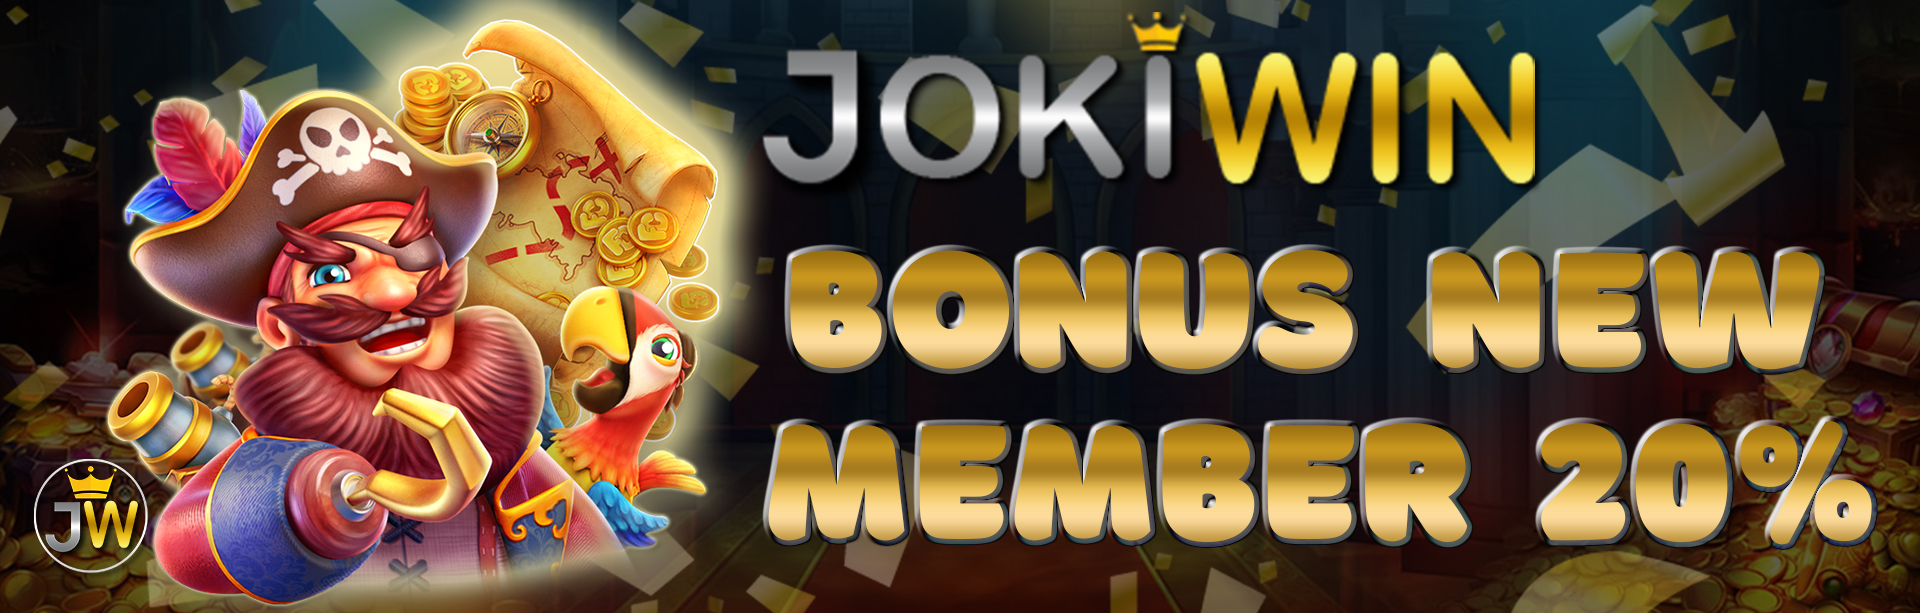 Jokiwin bonus new member 20%